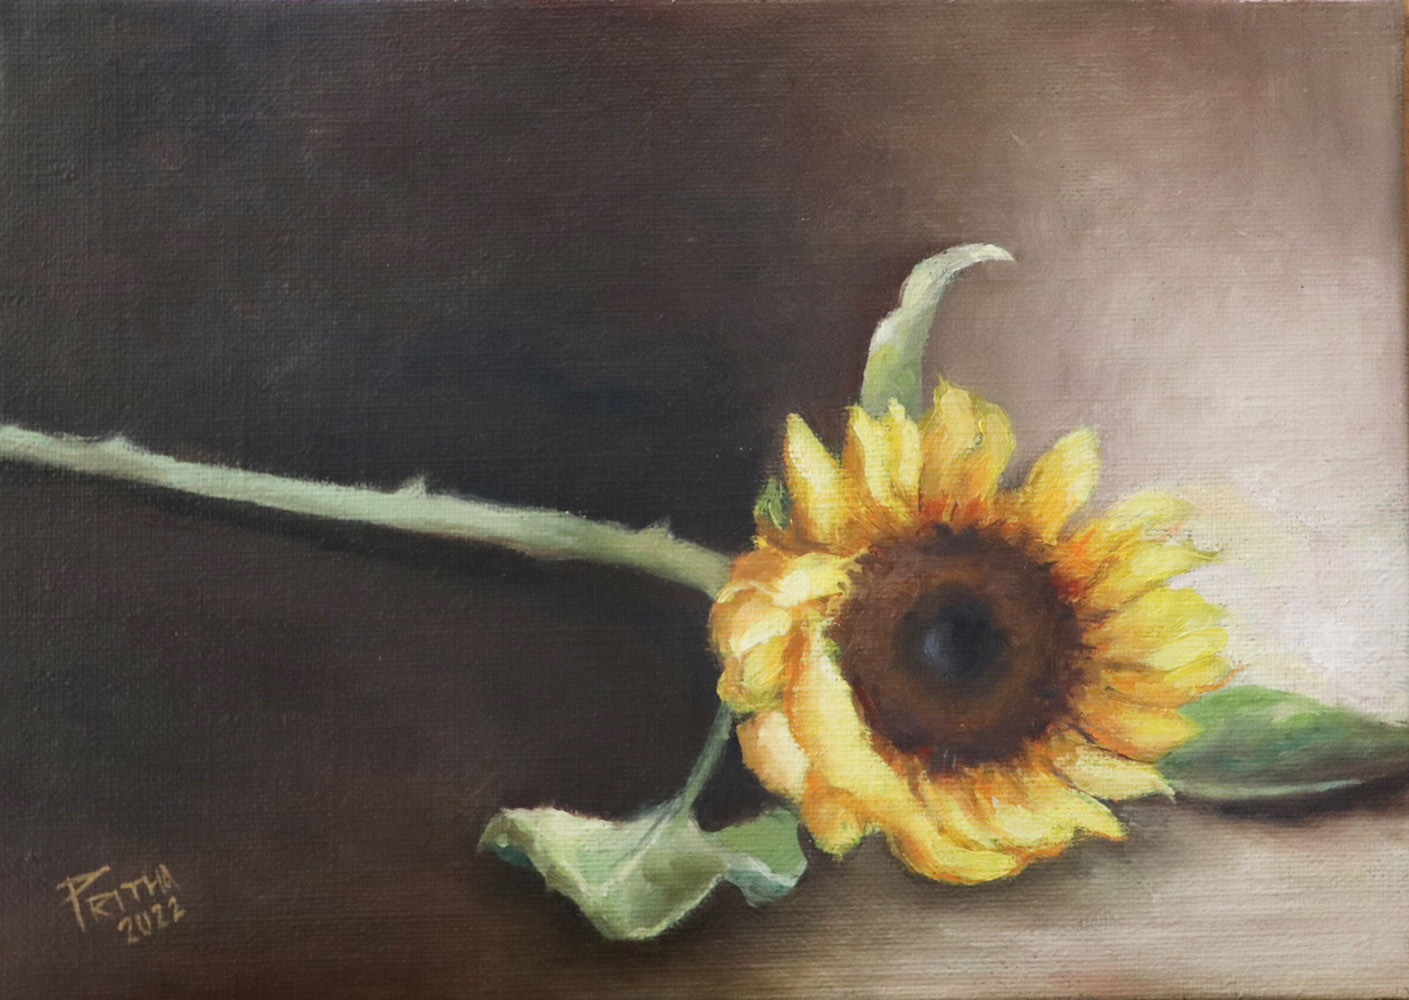 Buy painting online Singapore Exquisite Art Pritha Bhadra Sunflower